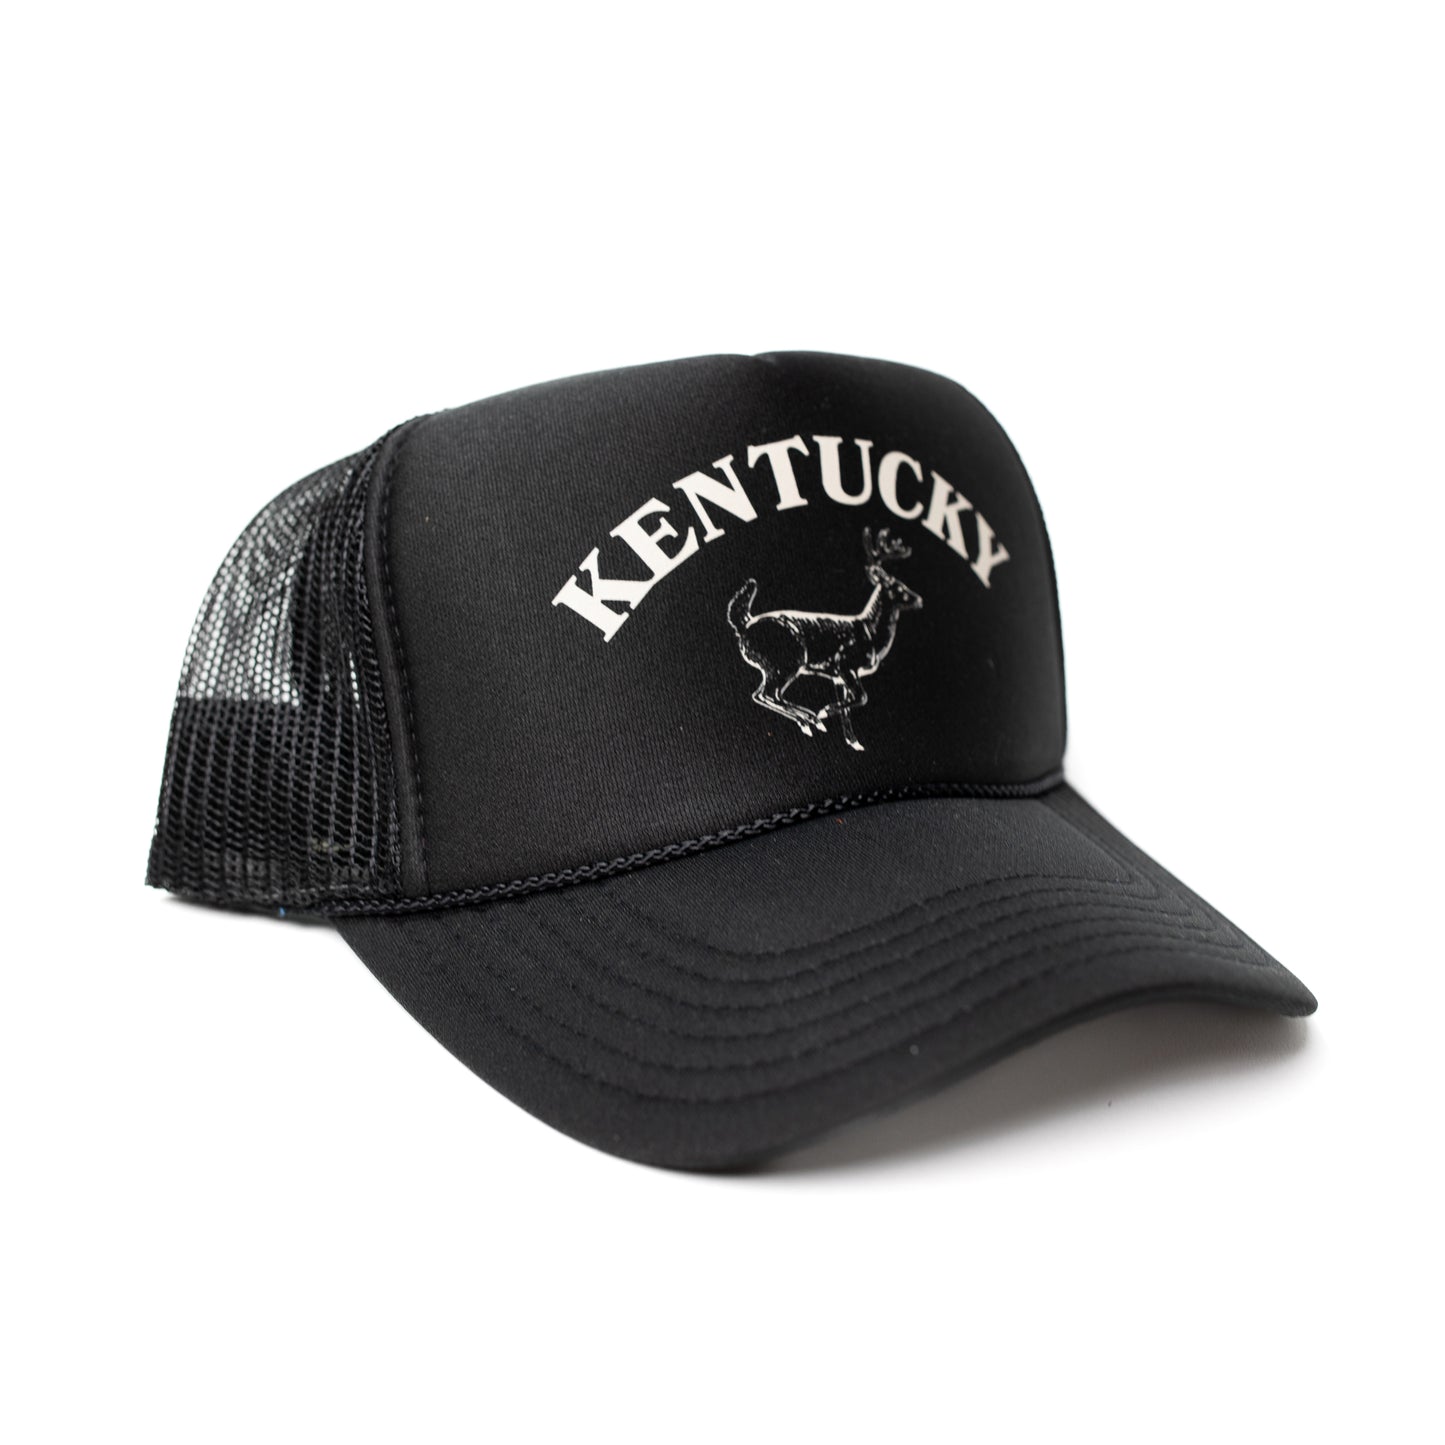 Kentucky Buck Hat (Black)